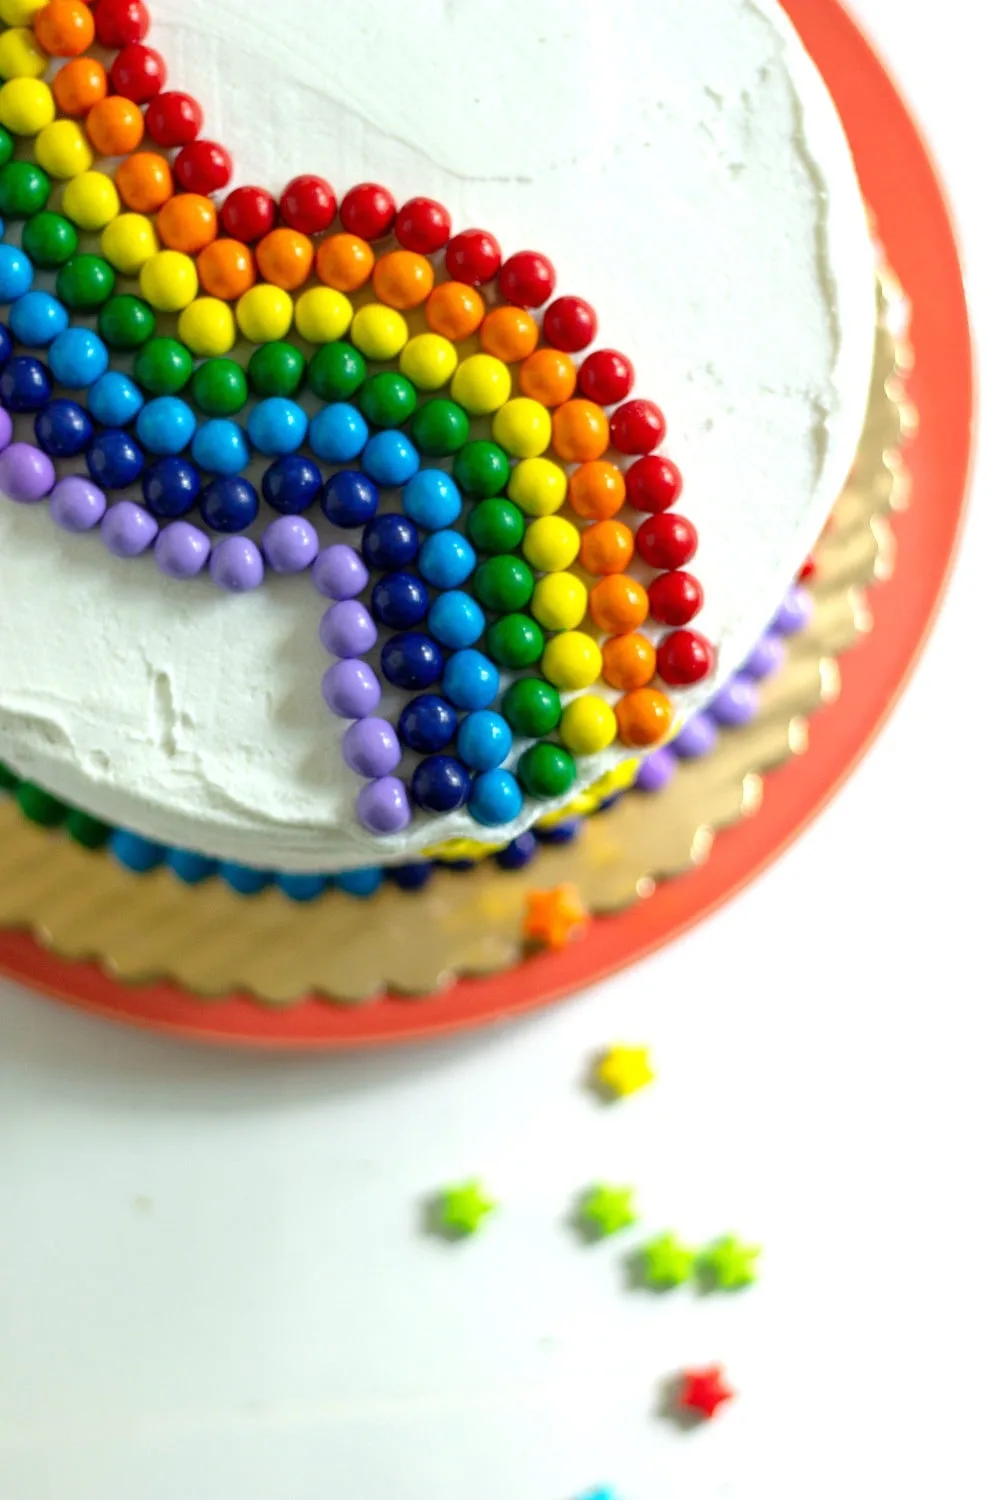 Quick and easy cake decorating - rainbow cake idea